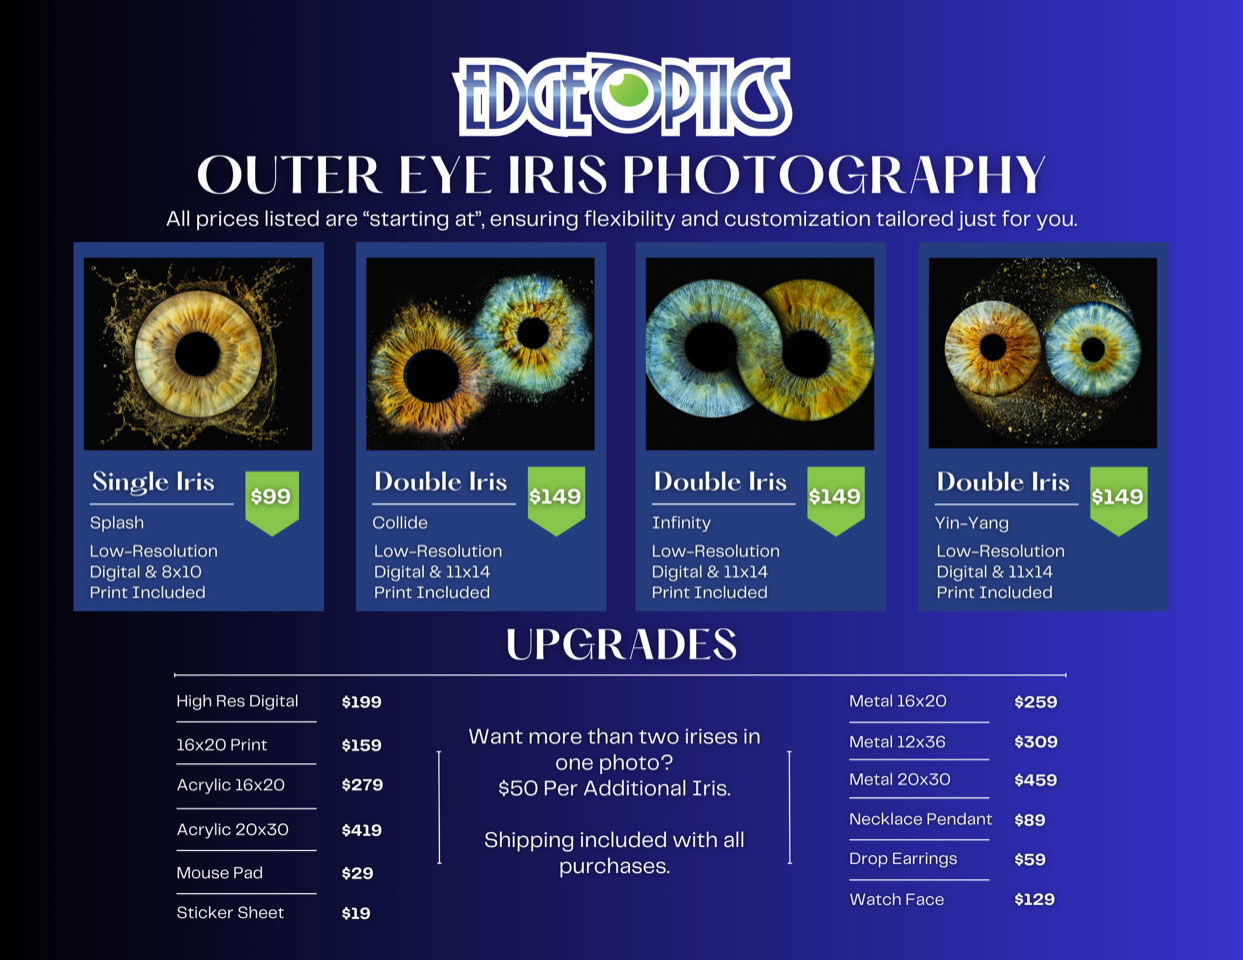 Outer Eye Iris Photography options at Edge Optics